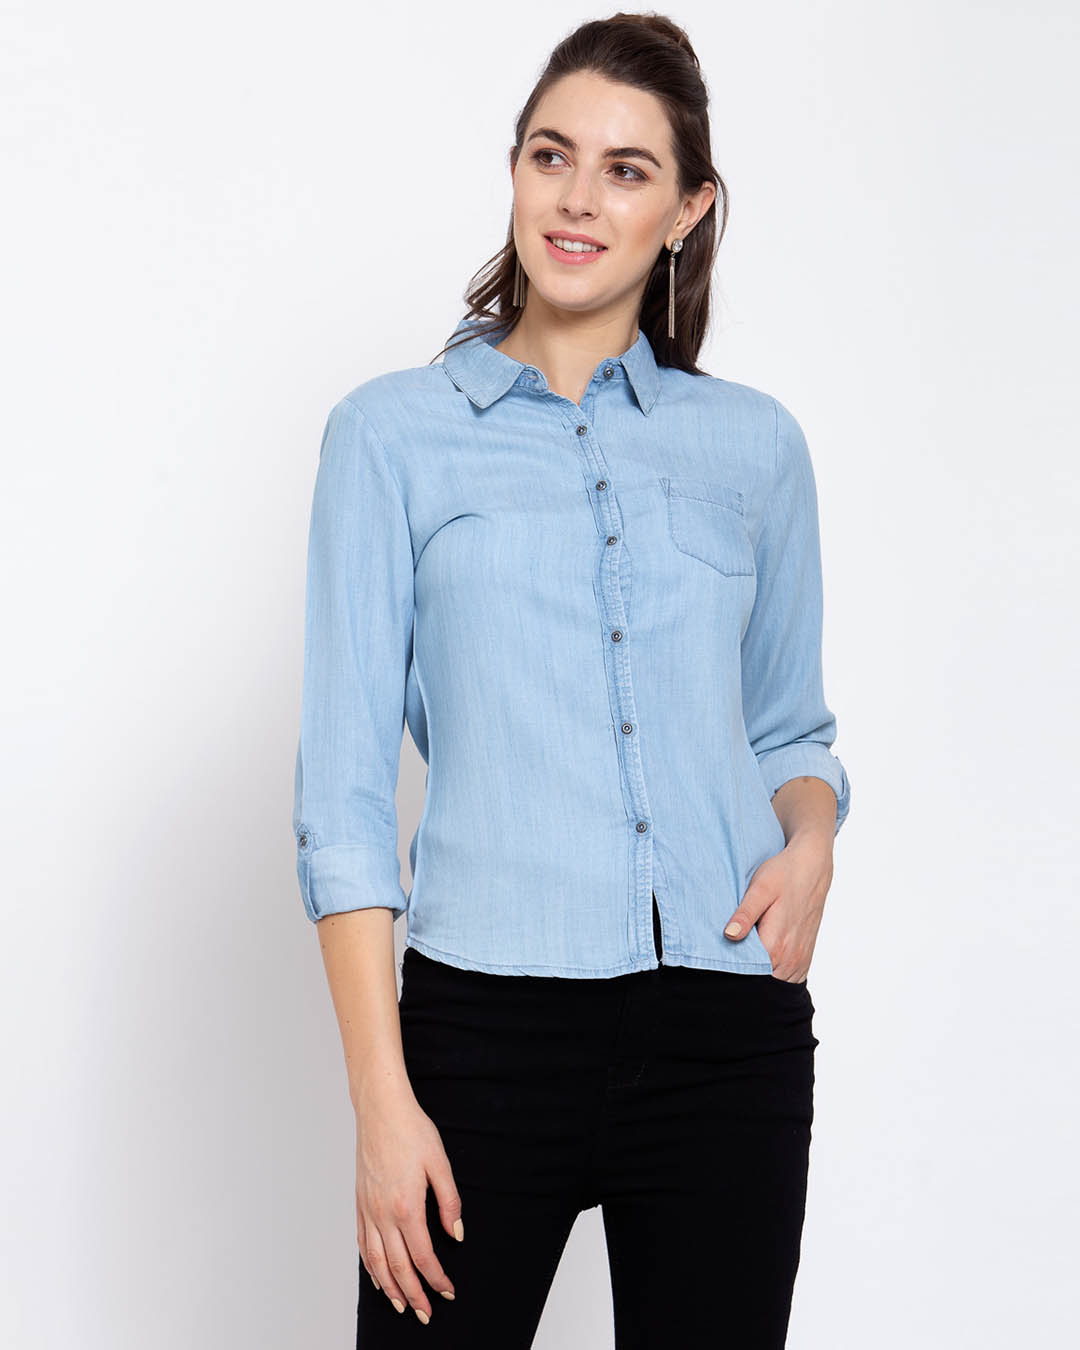 Long Sleeve Denim Shirt Women Button Down Chambray Shirt Casual Snap Jean  Shirts Blouse Top A-Blue at Amazon Women's Clothing store